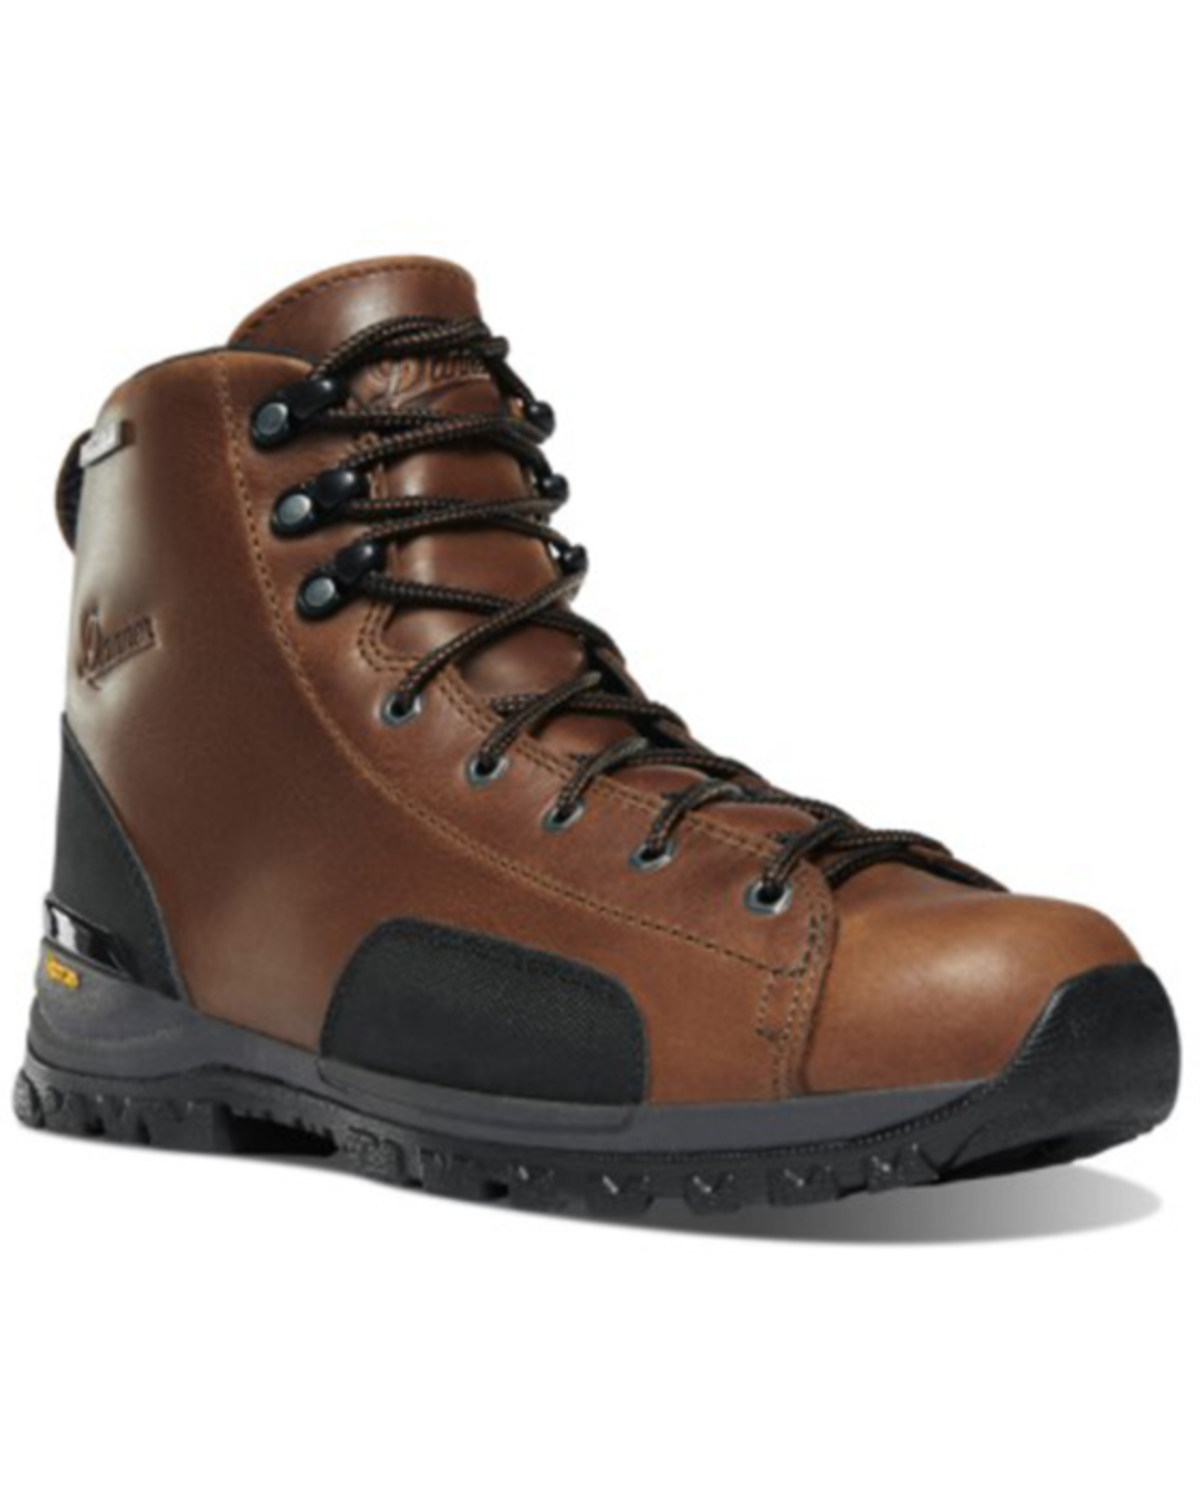 Danner Men's Stronghold Work Boots - Composite Toe